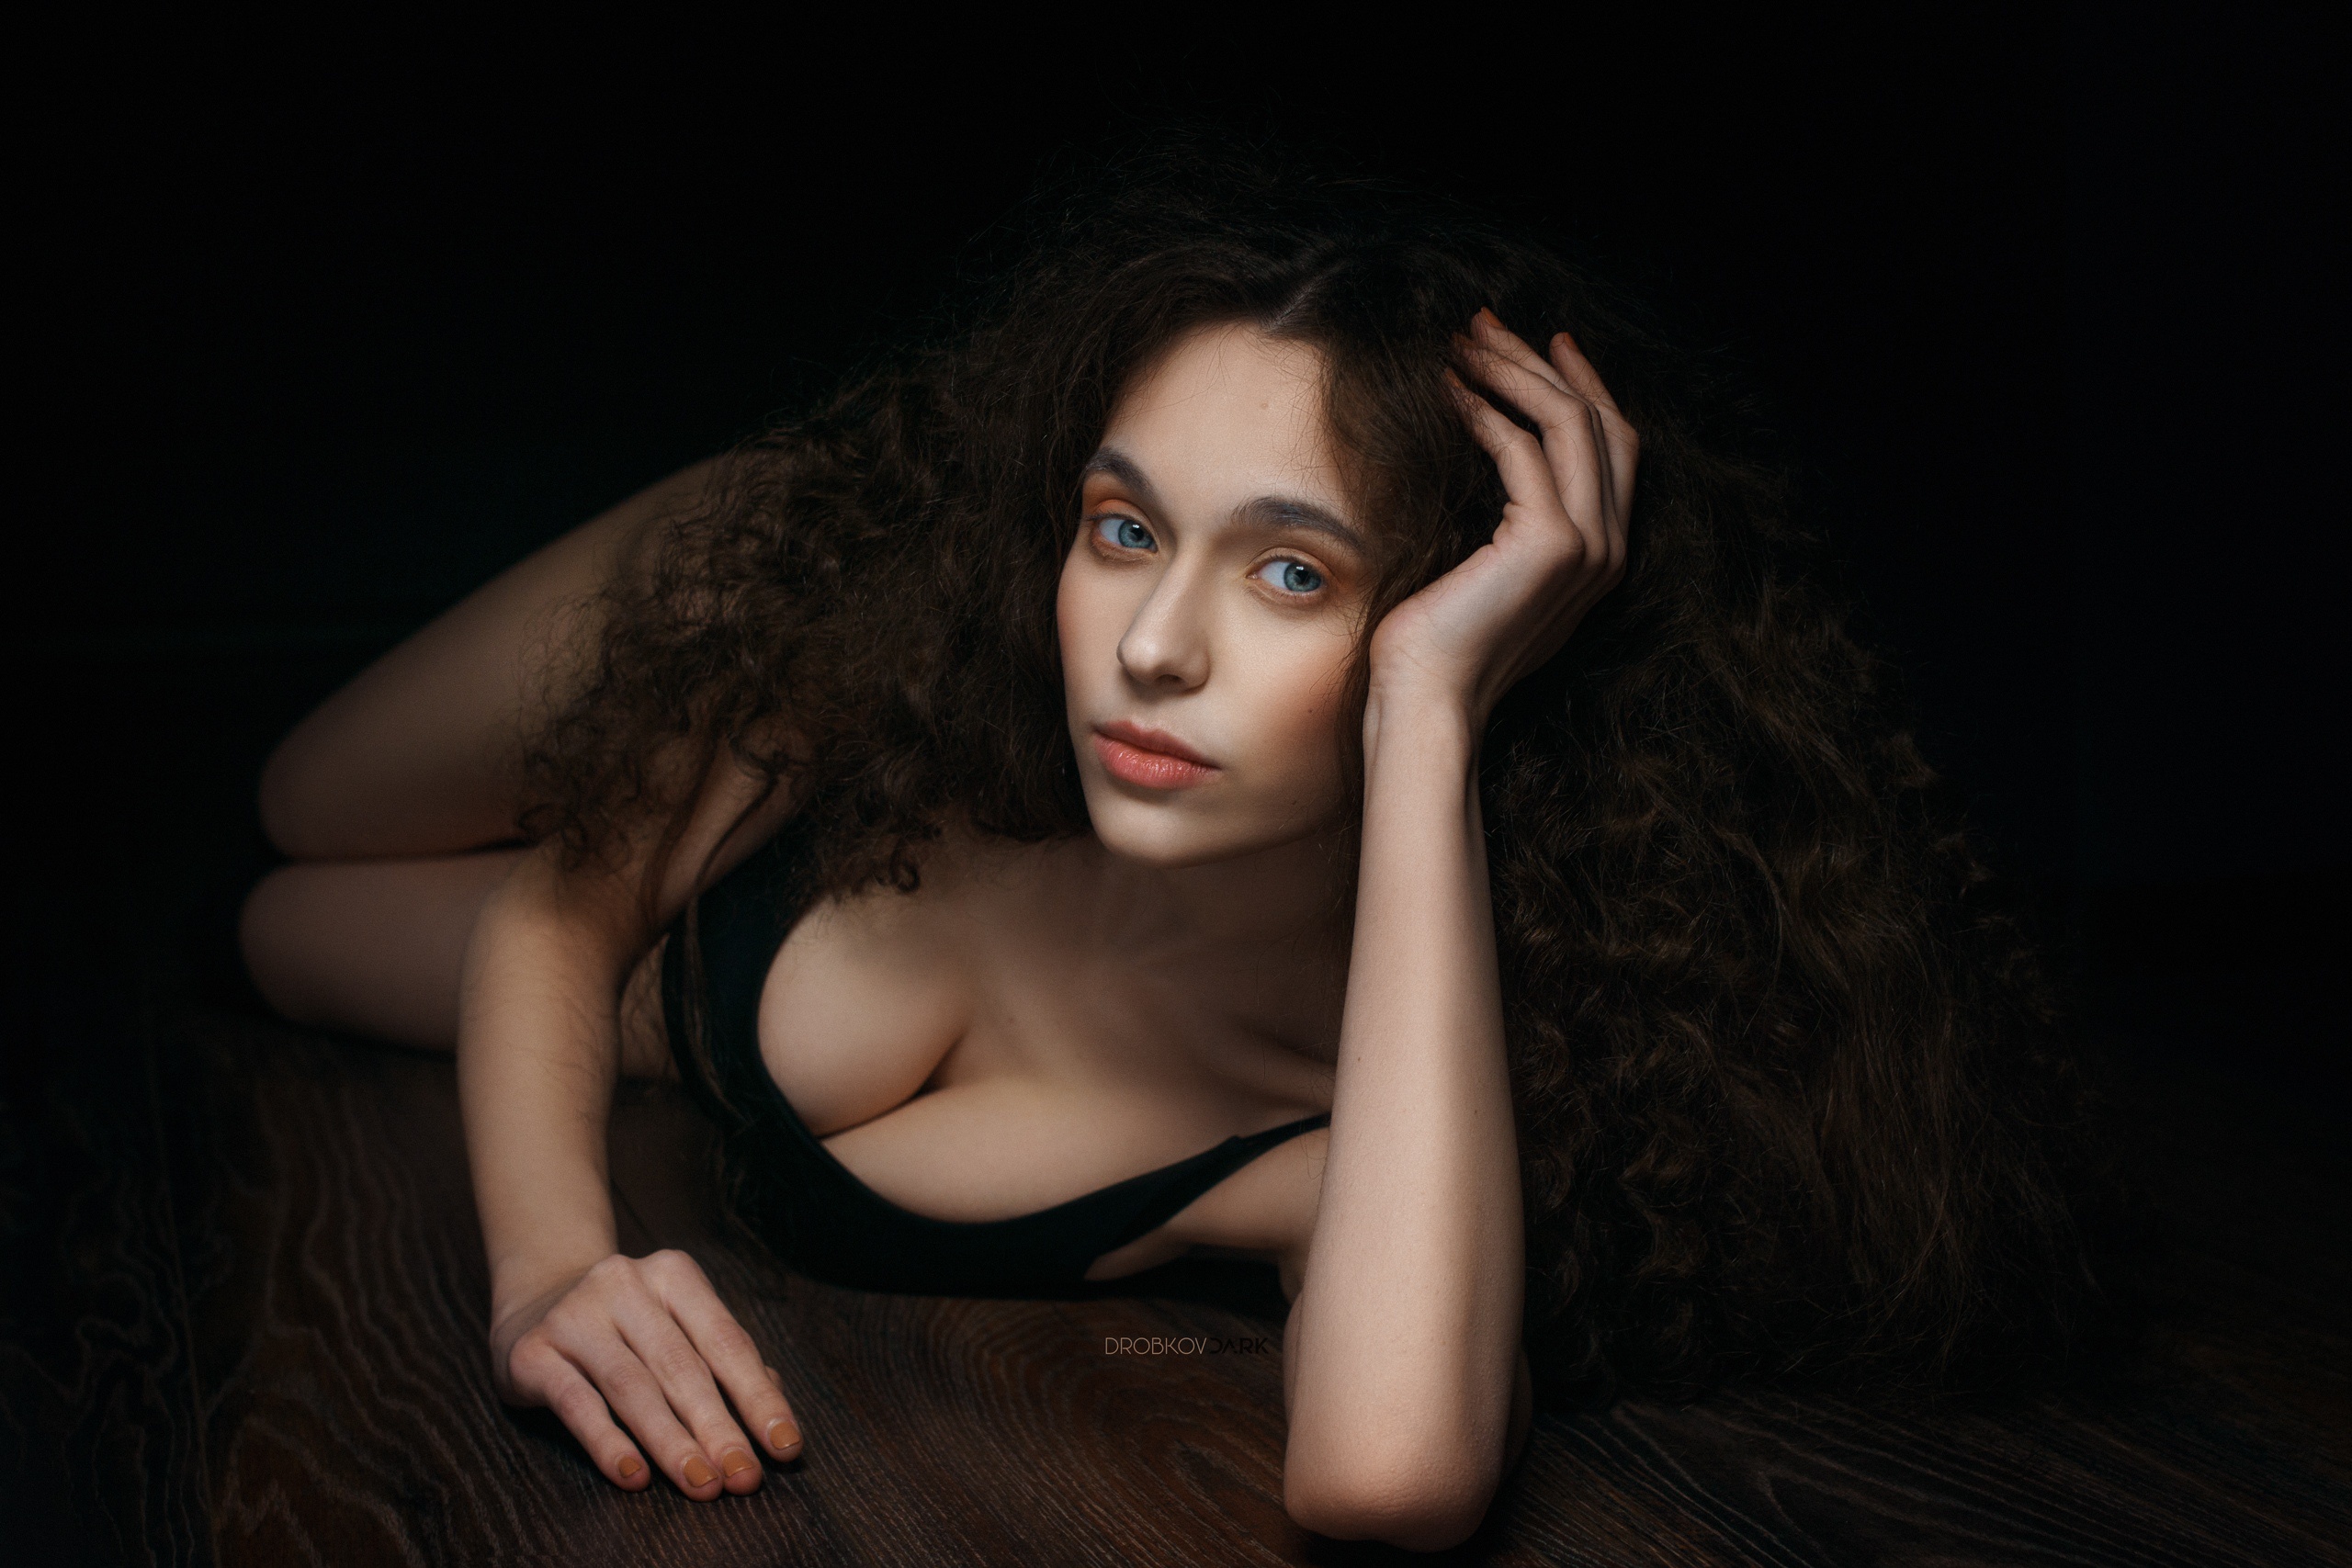 Alexander Drobkov Daria Afanasyeva Model Women Brunette Blue Eyes Bare Shoulders Top Hands In Hair L 2560x1707